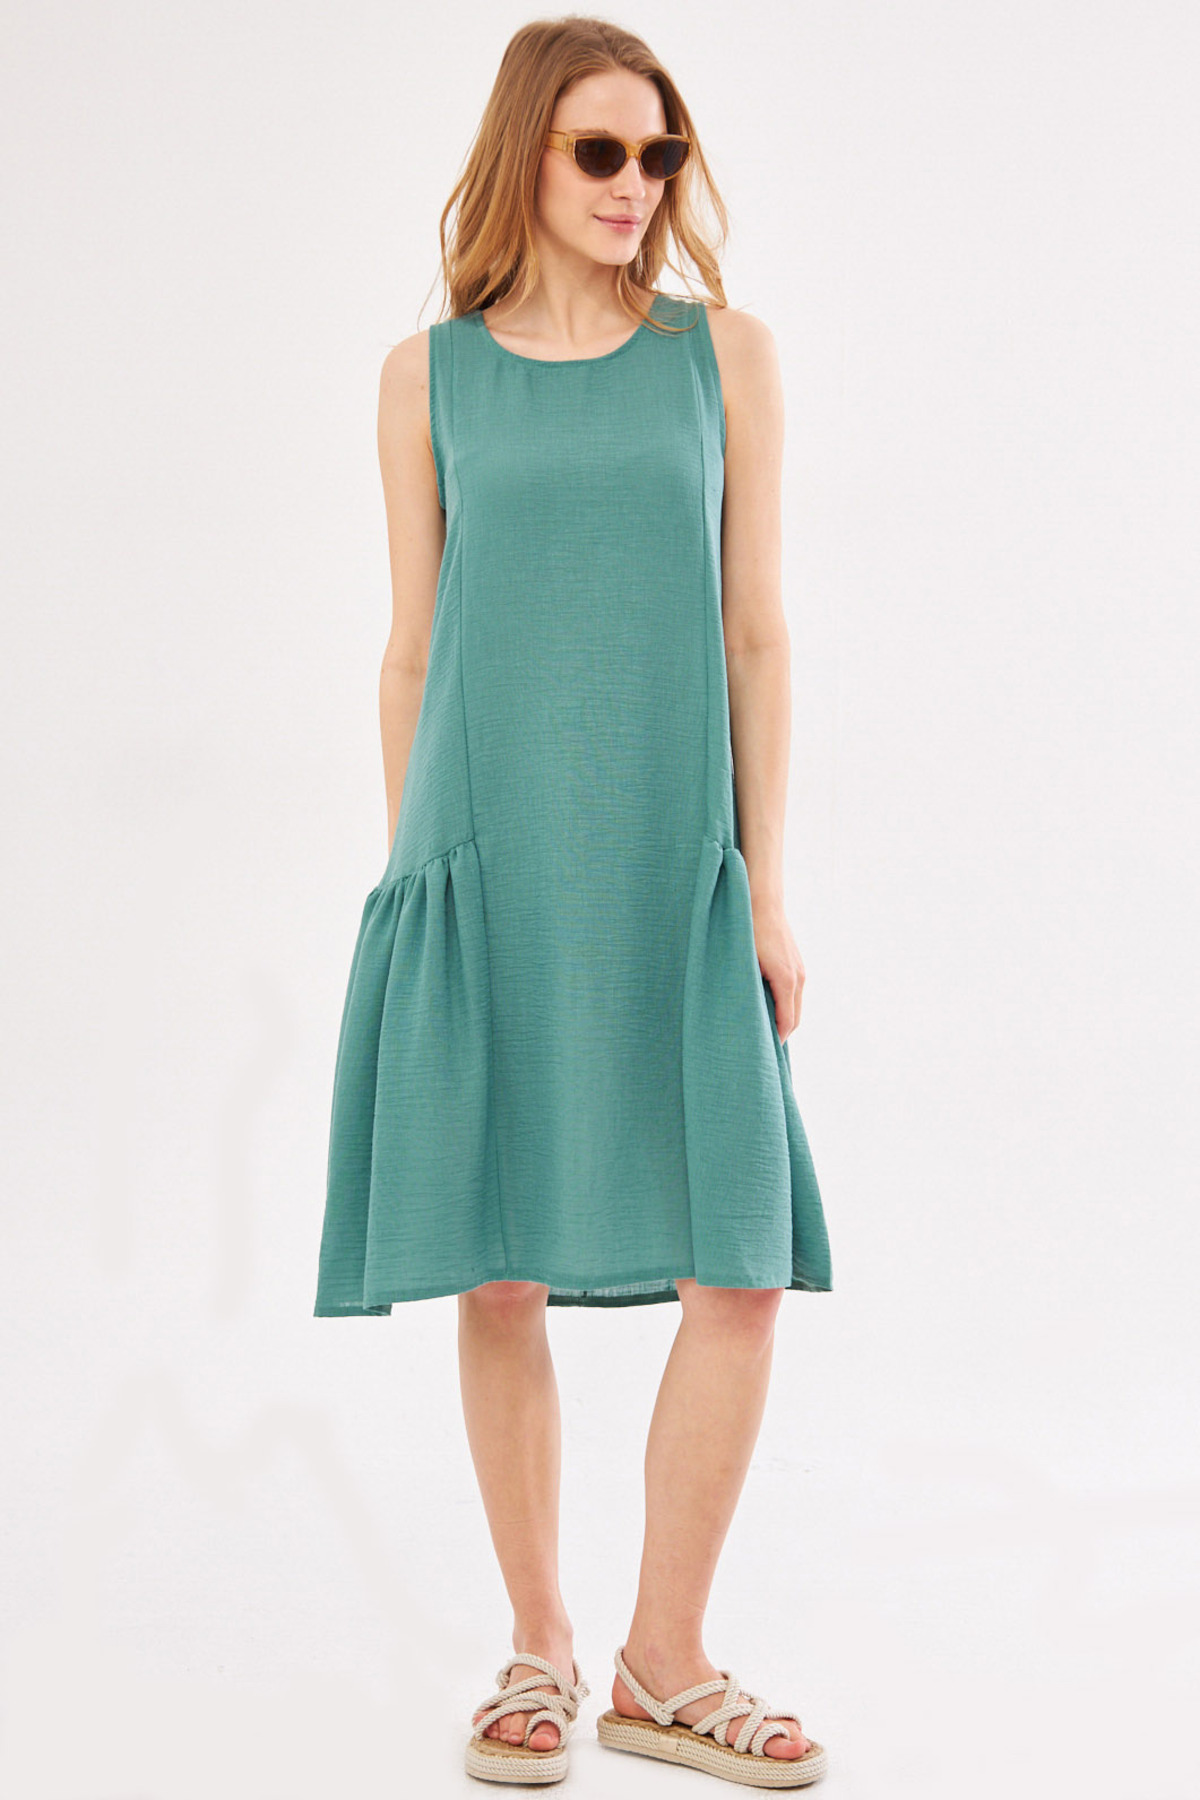 Levně armonika Women's Turquoise Decapped Dress Side Gathered Sleeveless Linen Look Midi Length